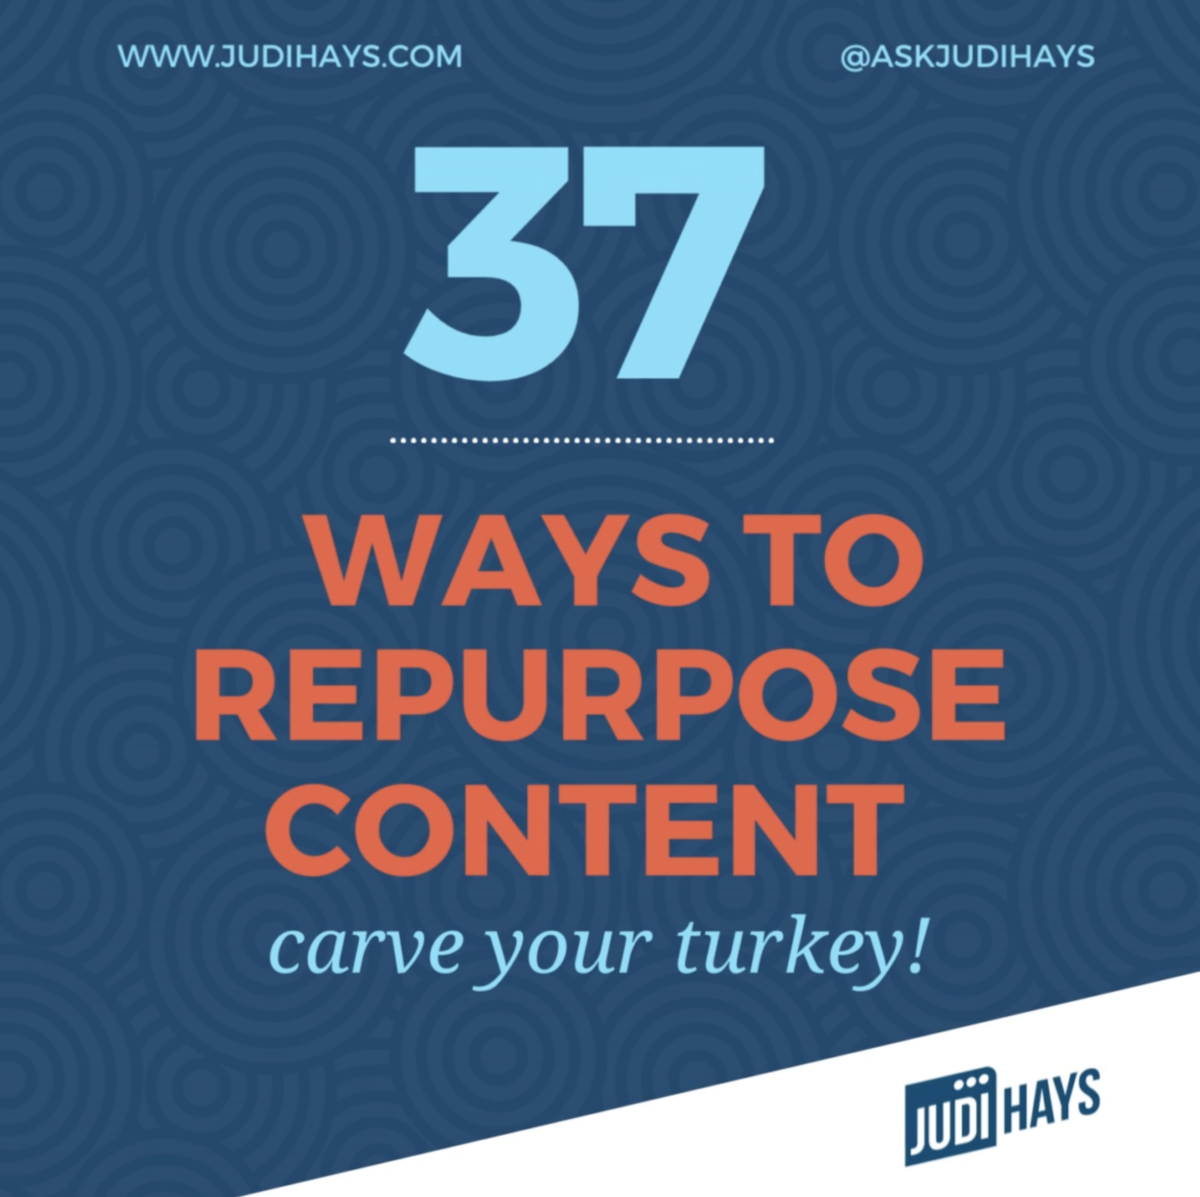 Turkey Content Carousel-37 ideas